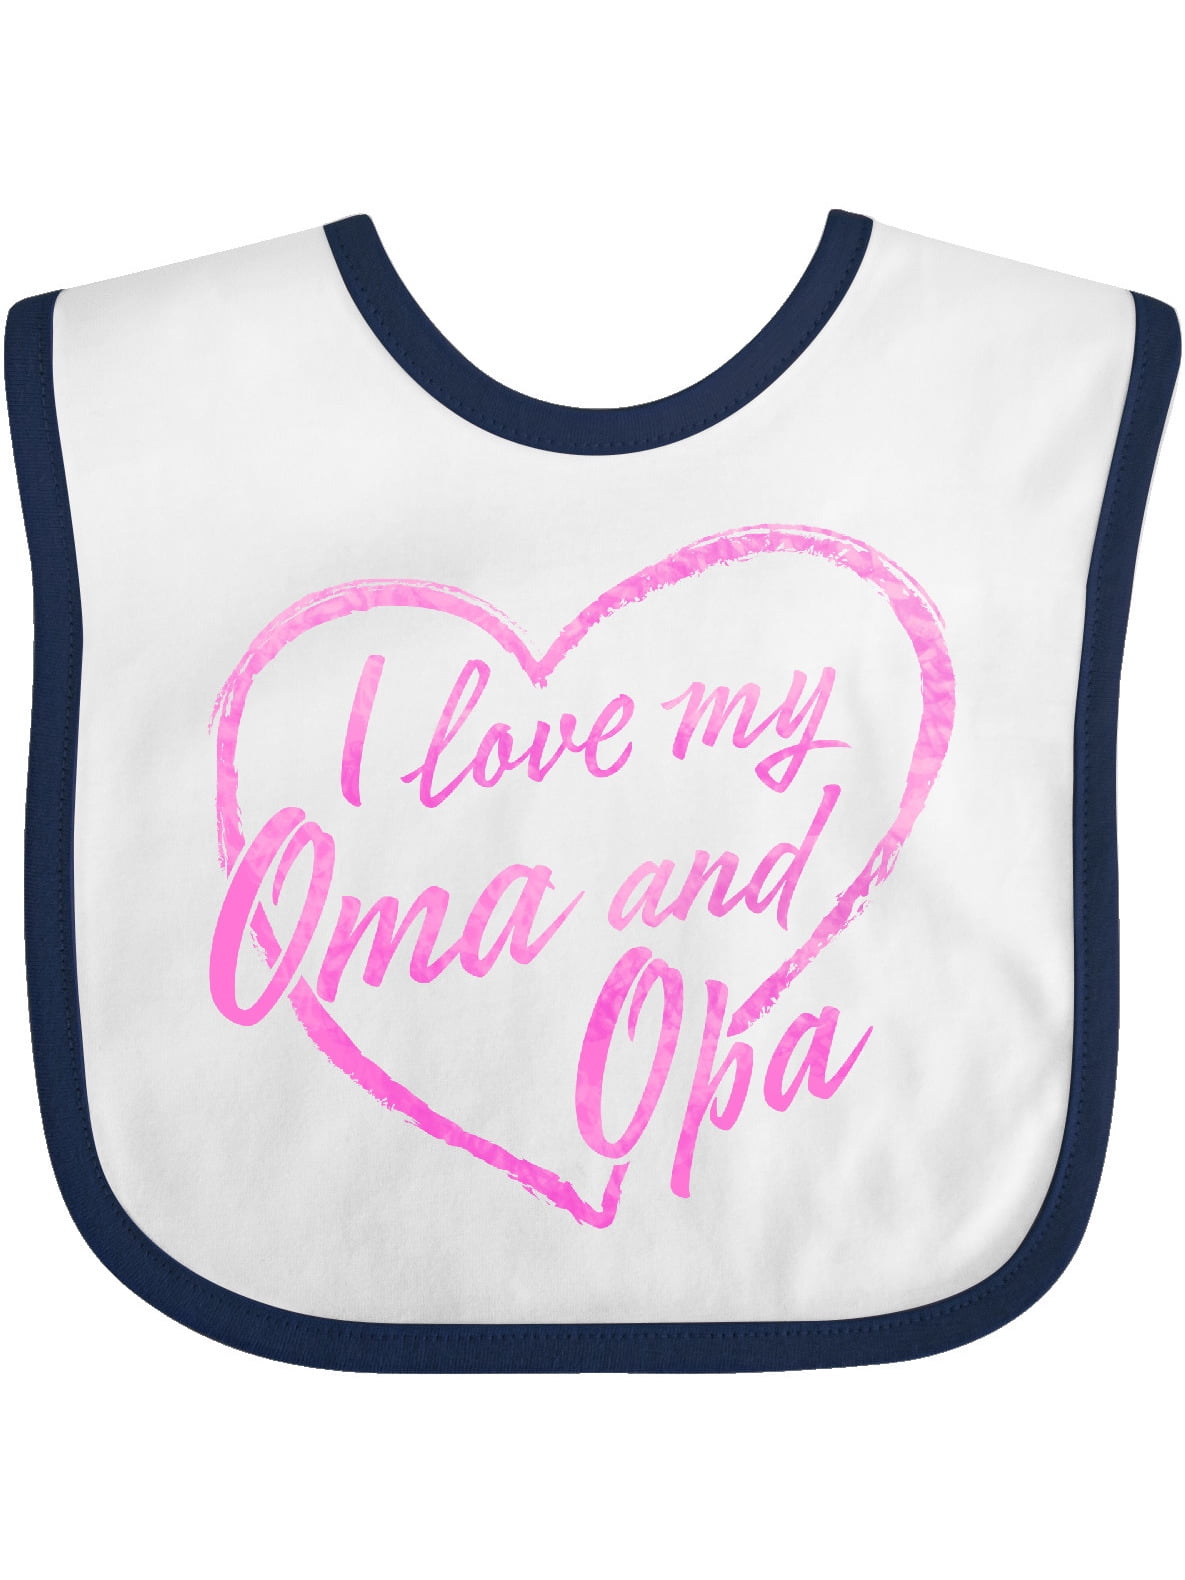 I Love My Oma and Opa in Pink Chalk Heart Baby Bib - Walmart.com ...